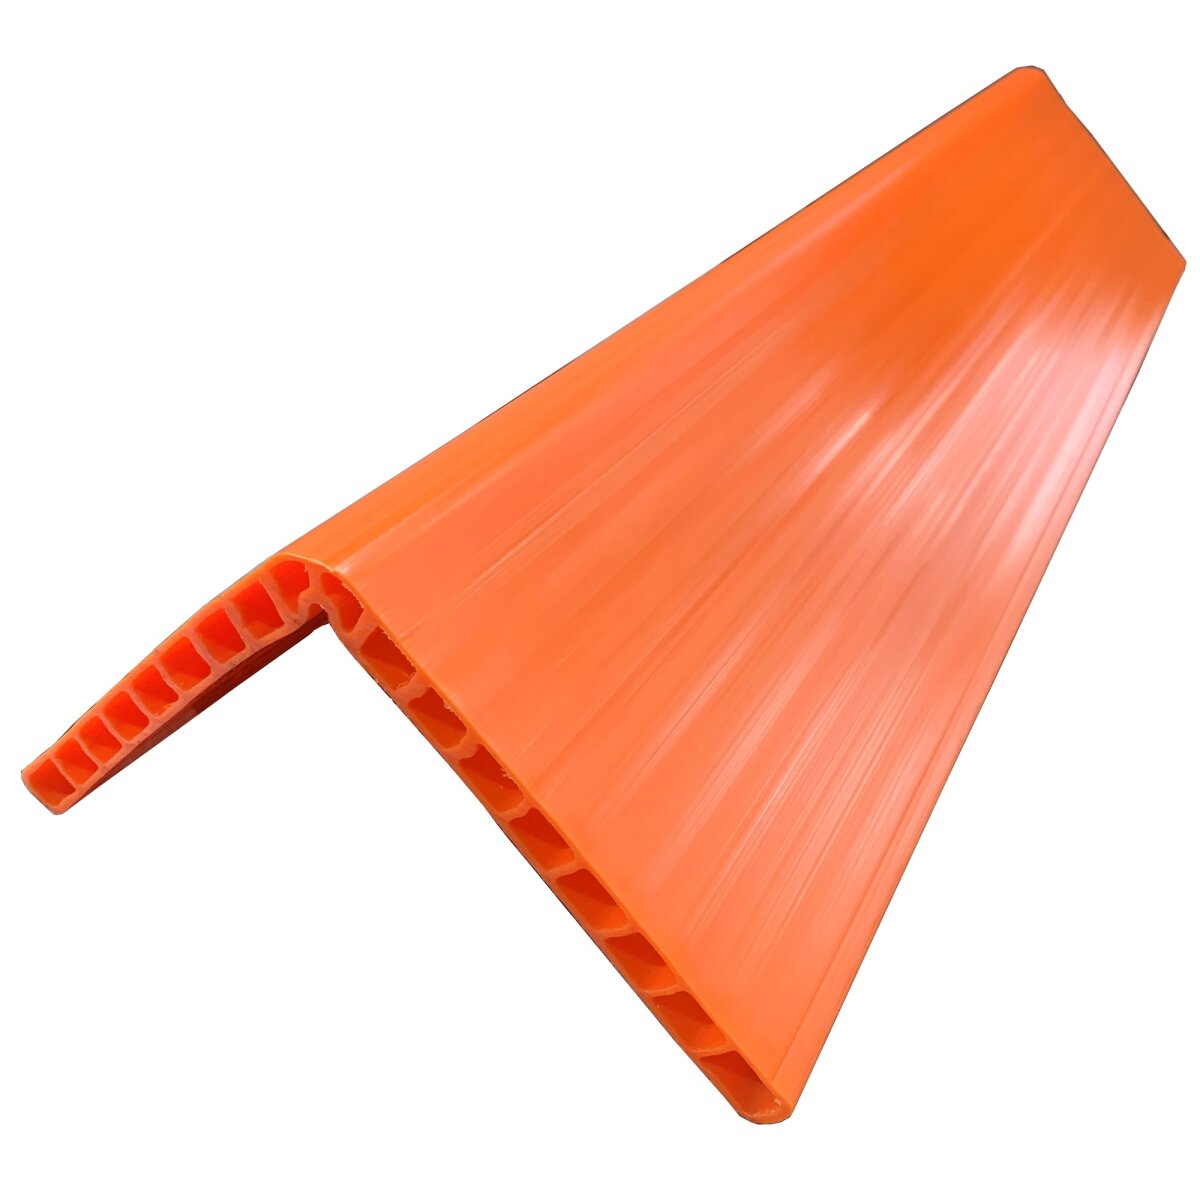 https://lkw-spanngurte.de/media/image/product/2958/lg/kantenschutzschiene-doppelsteg-orange-190-x-190-x-19-mm.jpg